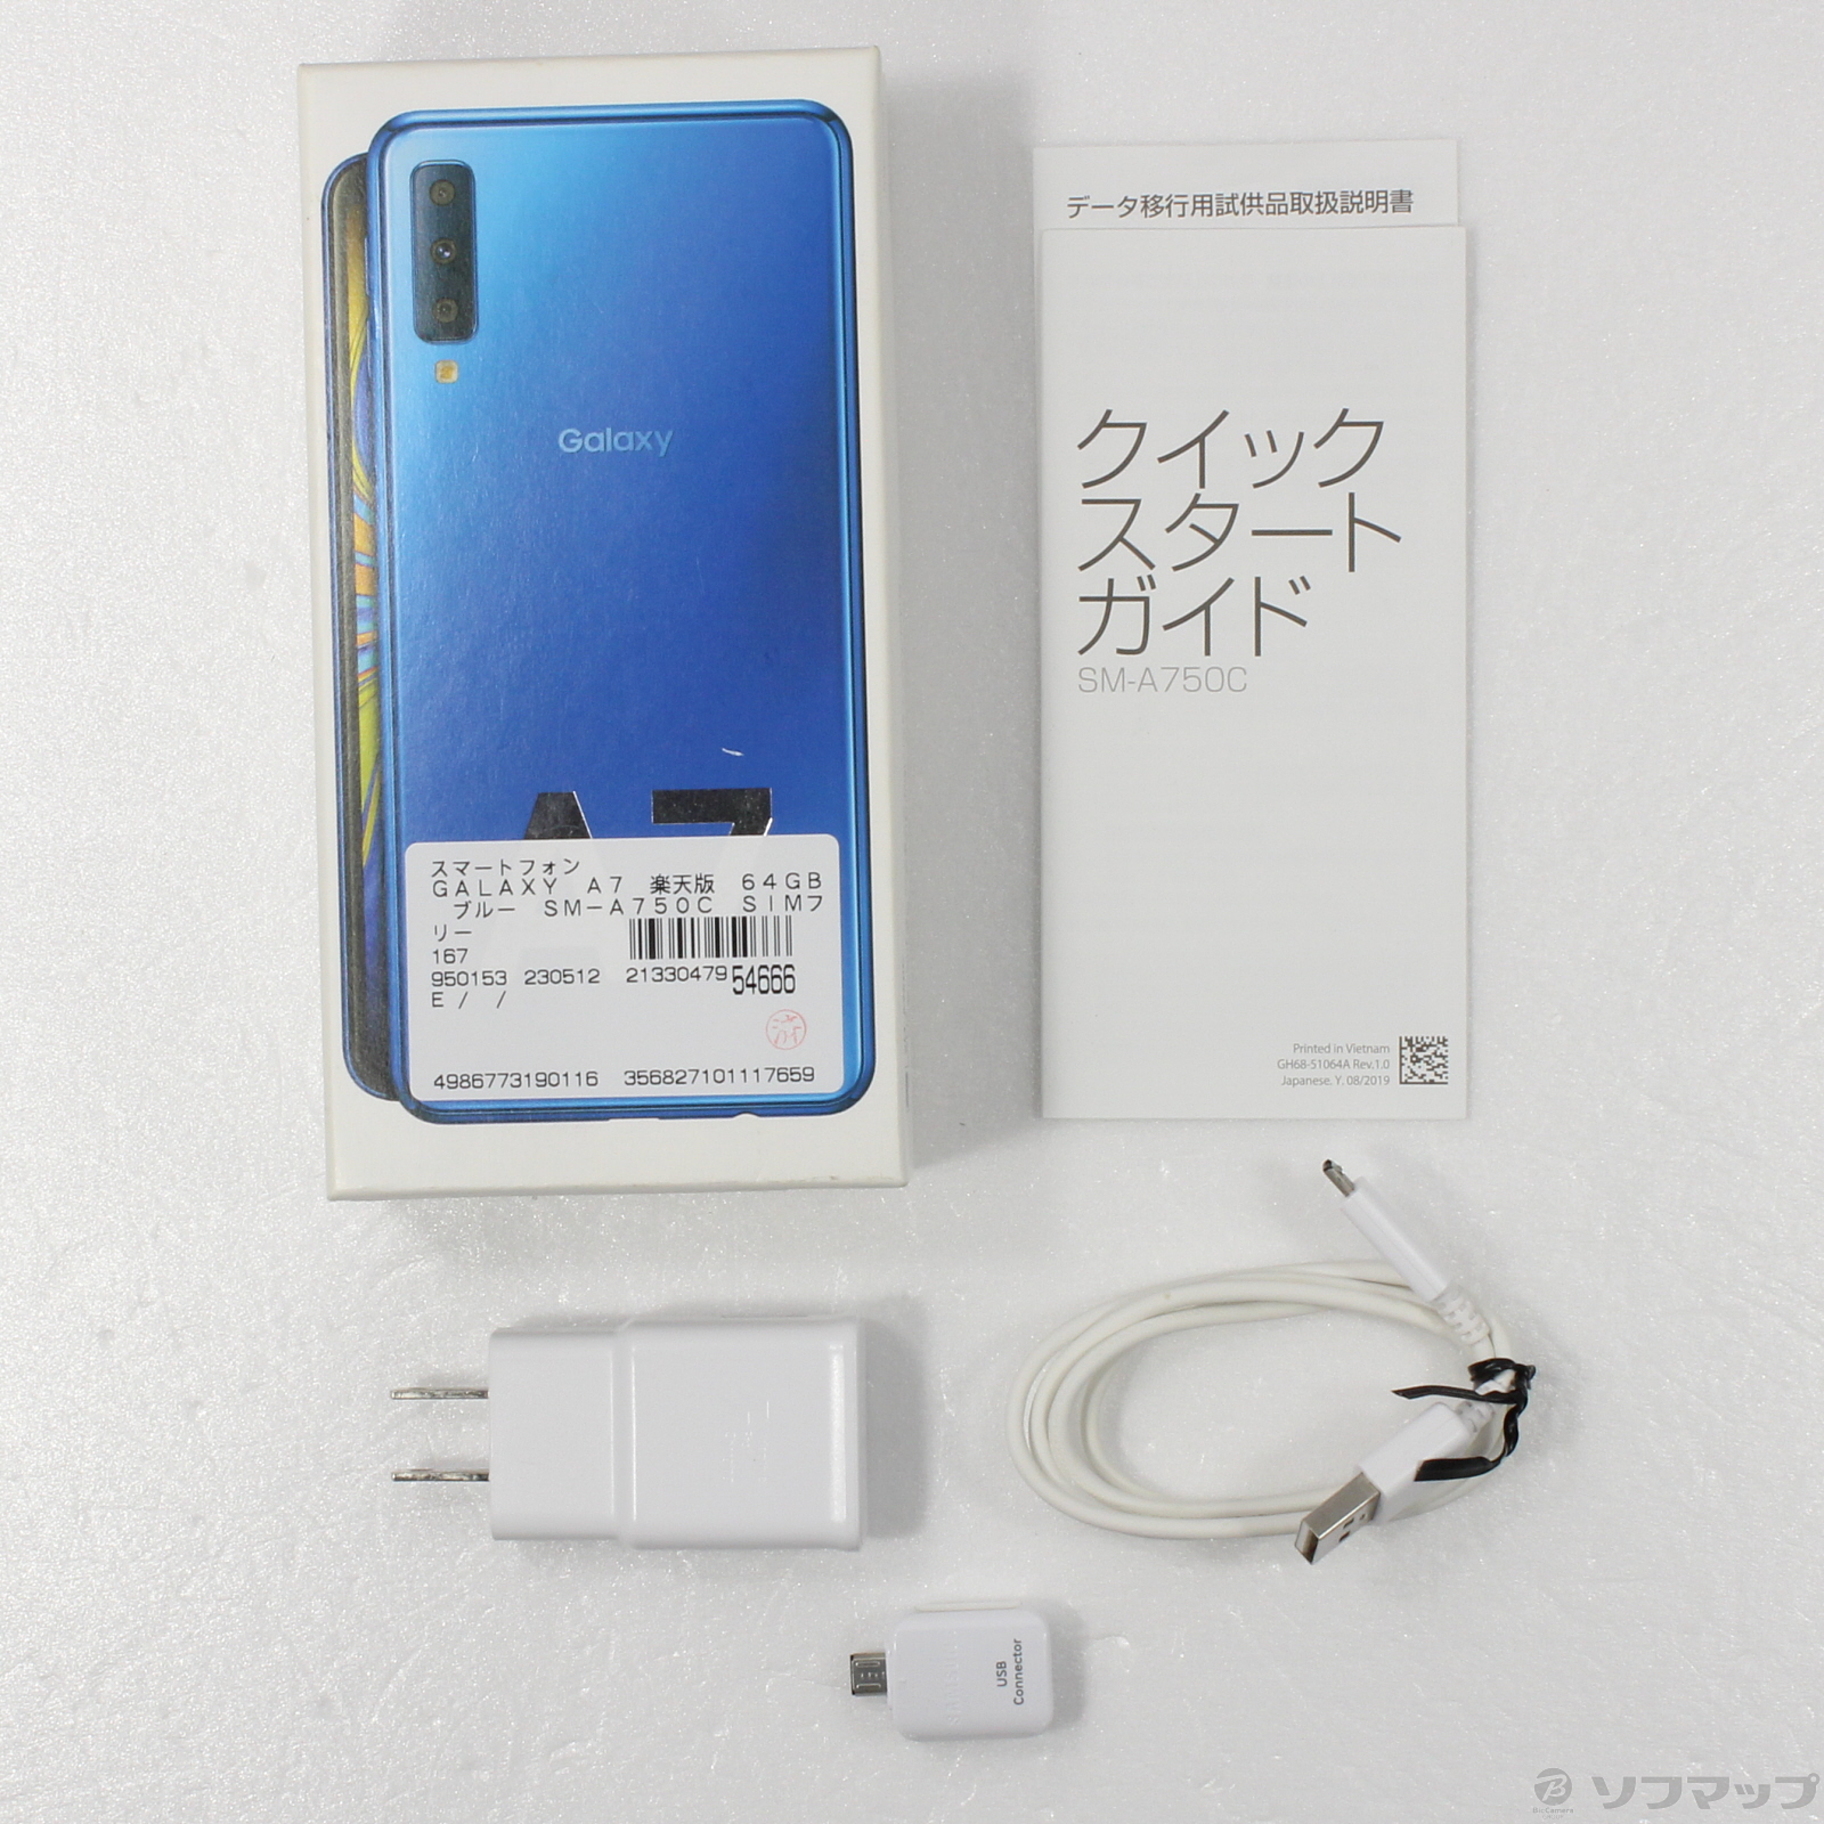 Galaxy A7 ブルー 64 GB その他 - スマートフォン本体